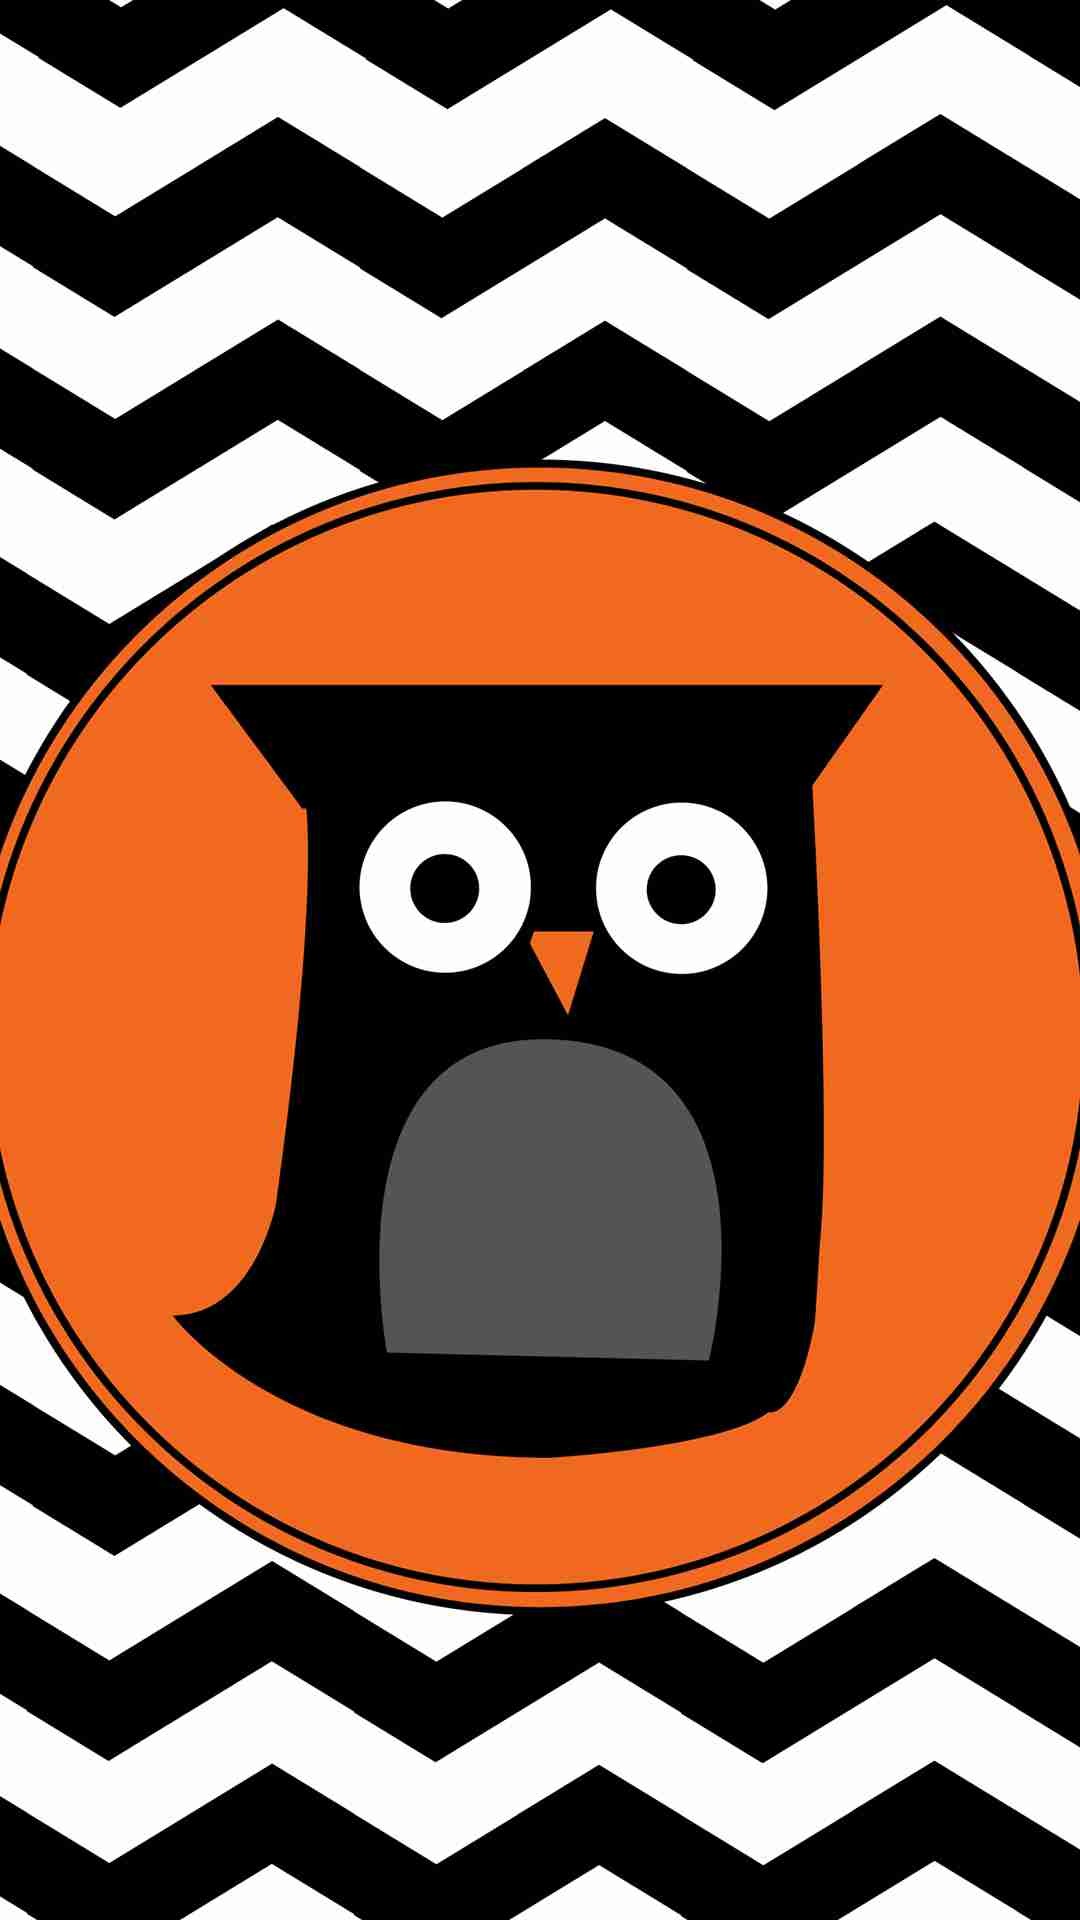 Cartoon Owl and Chevron Pattern iPhone 6 Plus Wallpaper ...